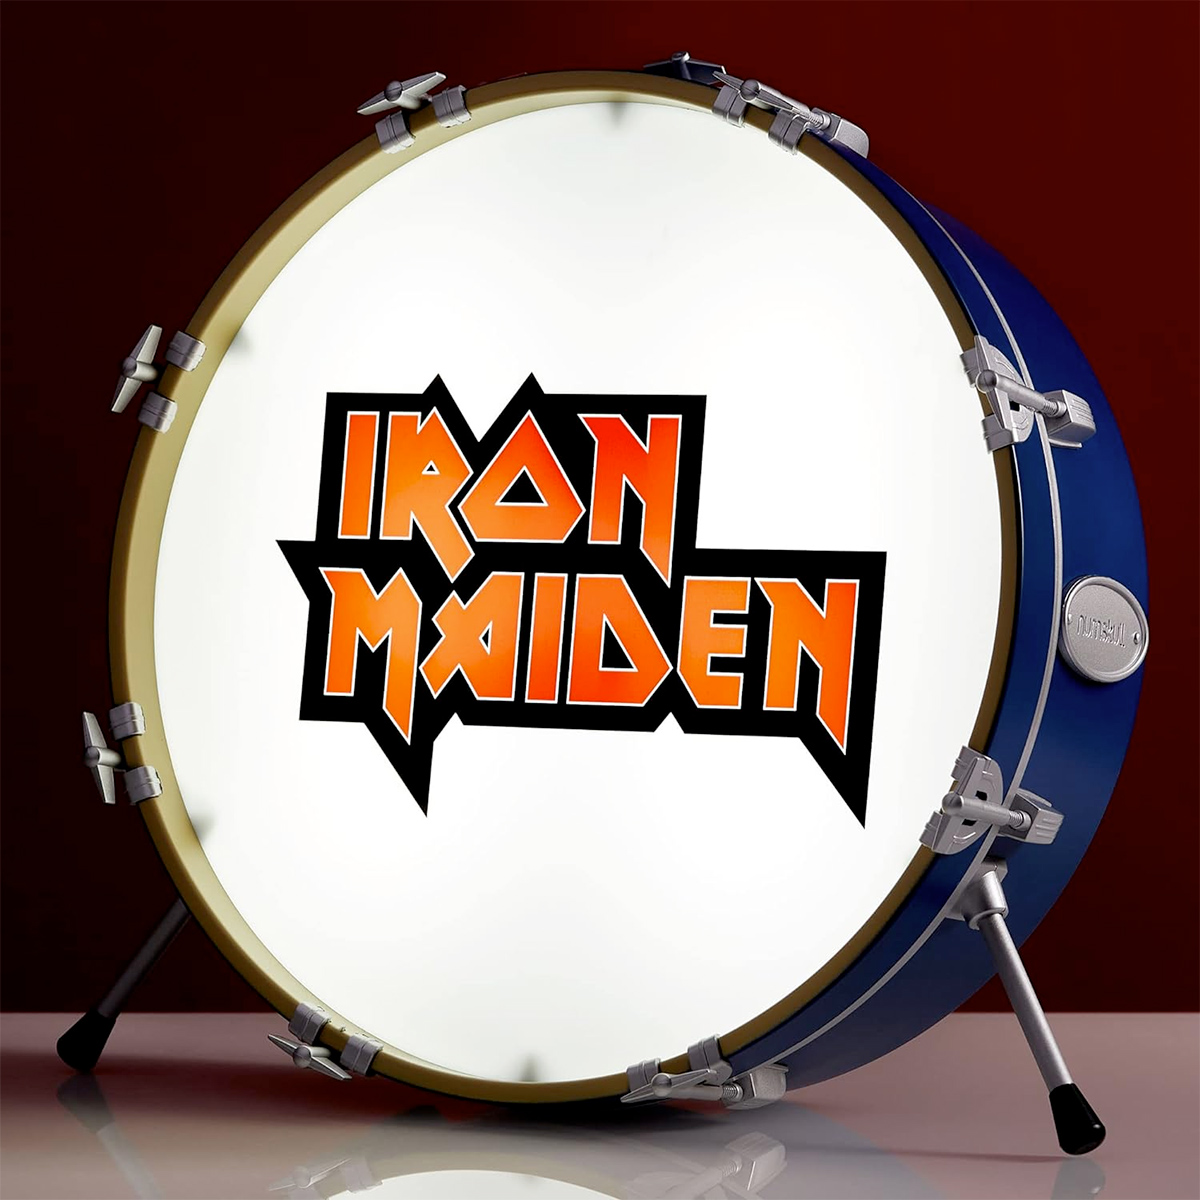 Luminárias Numskull Rock 'n' Roll Bass Drum 3D: Ozzy Osbourne, Iron Maiden e Motorhead